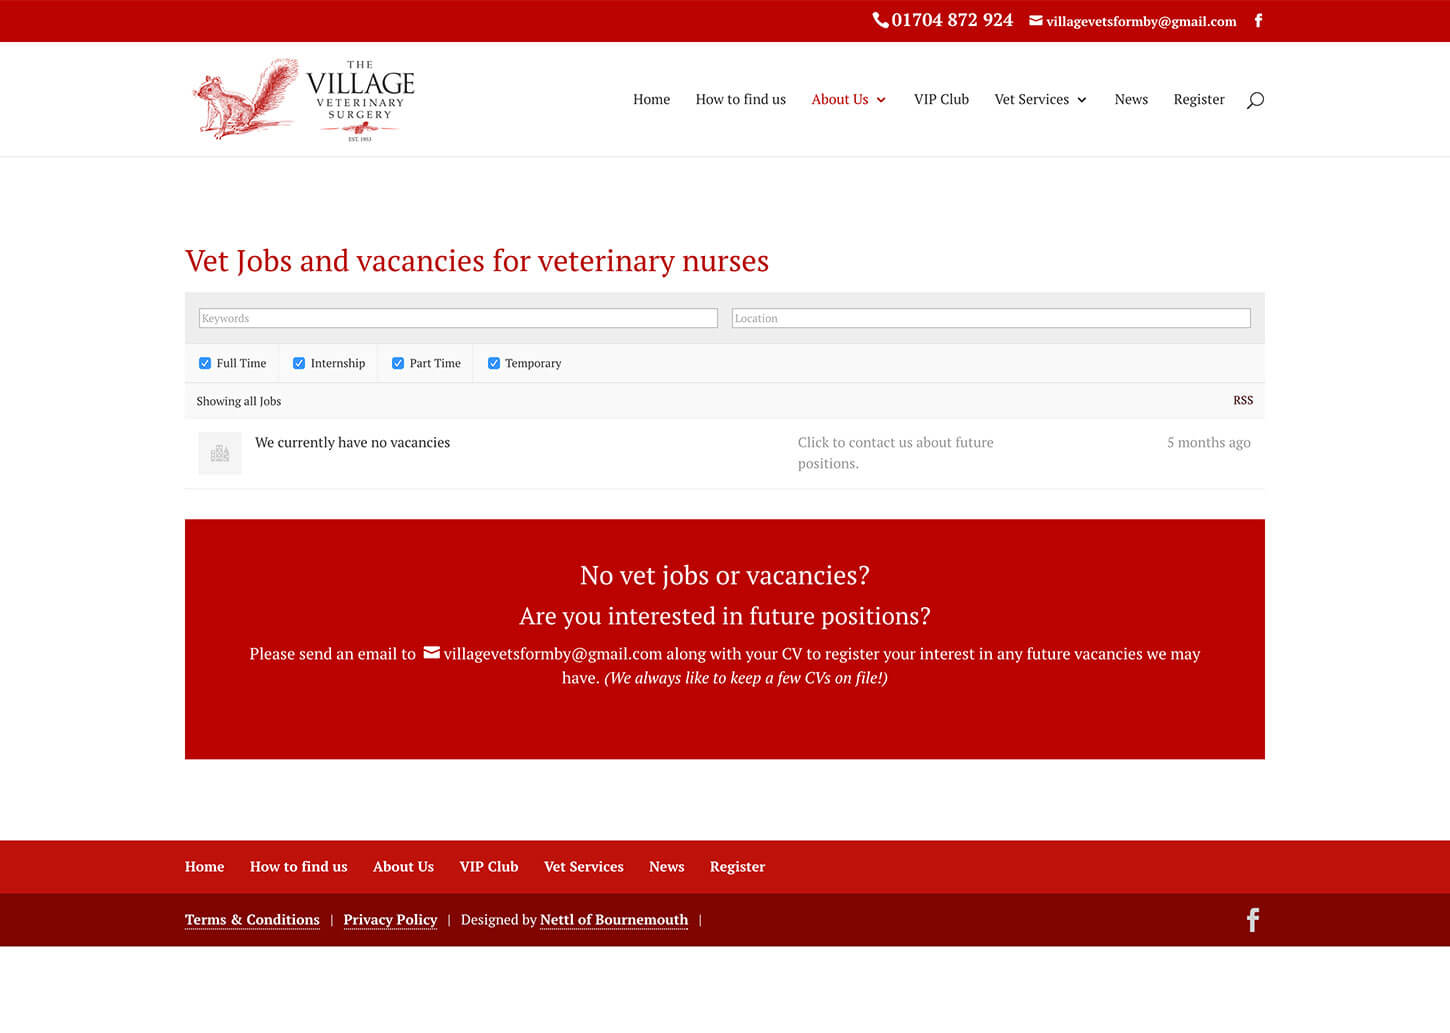 Village Vets website design: Job vacancy page